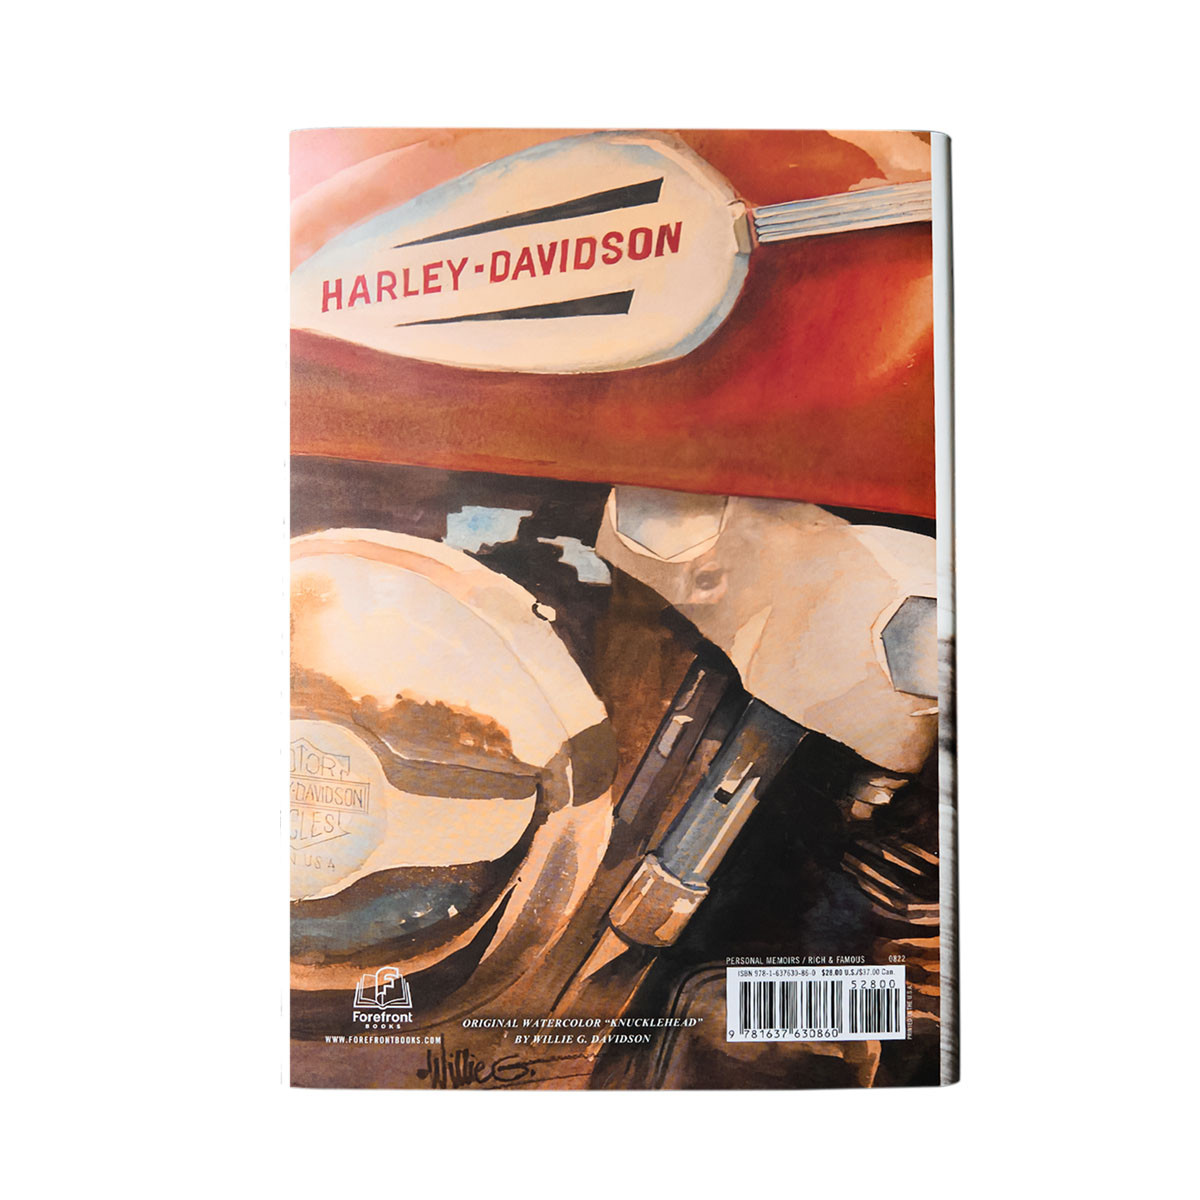 HARLEY DAVIDSON RIDE FREE A MEMOIR – WILLIE G. DAVIDSON BOOK